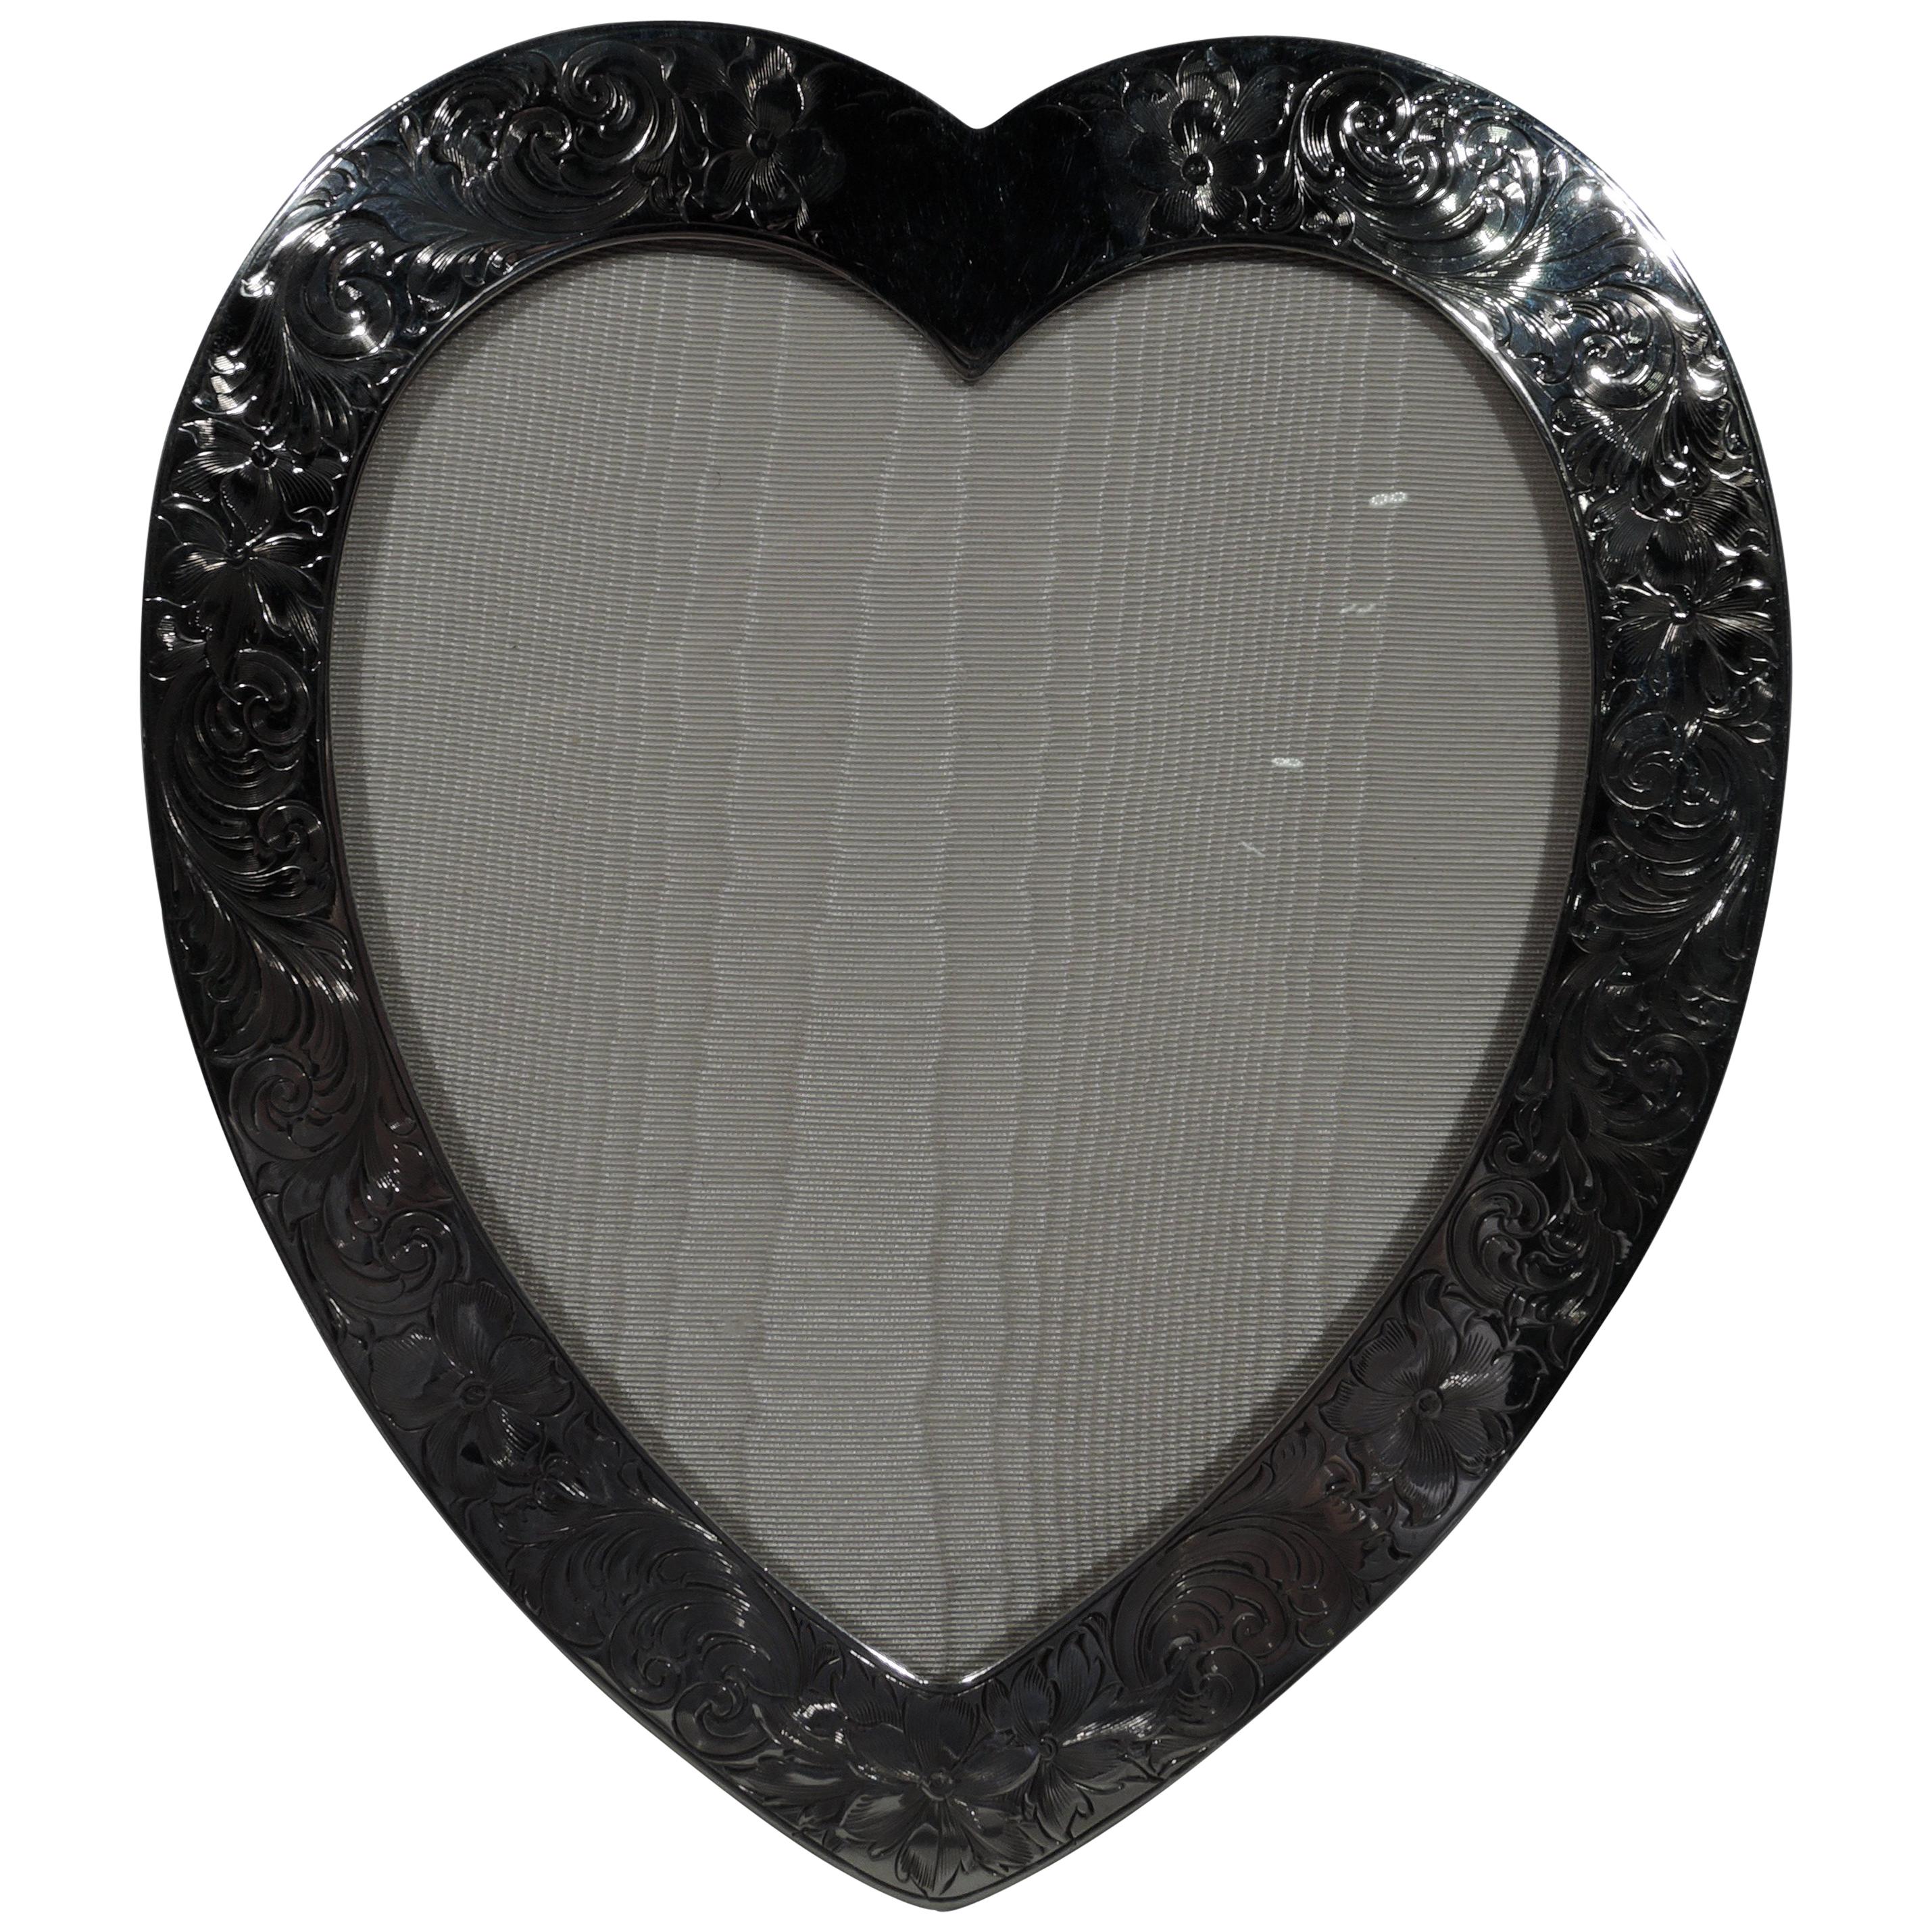 Antique Gorham Sterling Silver Valentine’s Day Heart Picture Frame